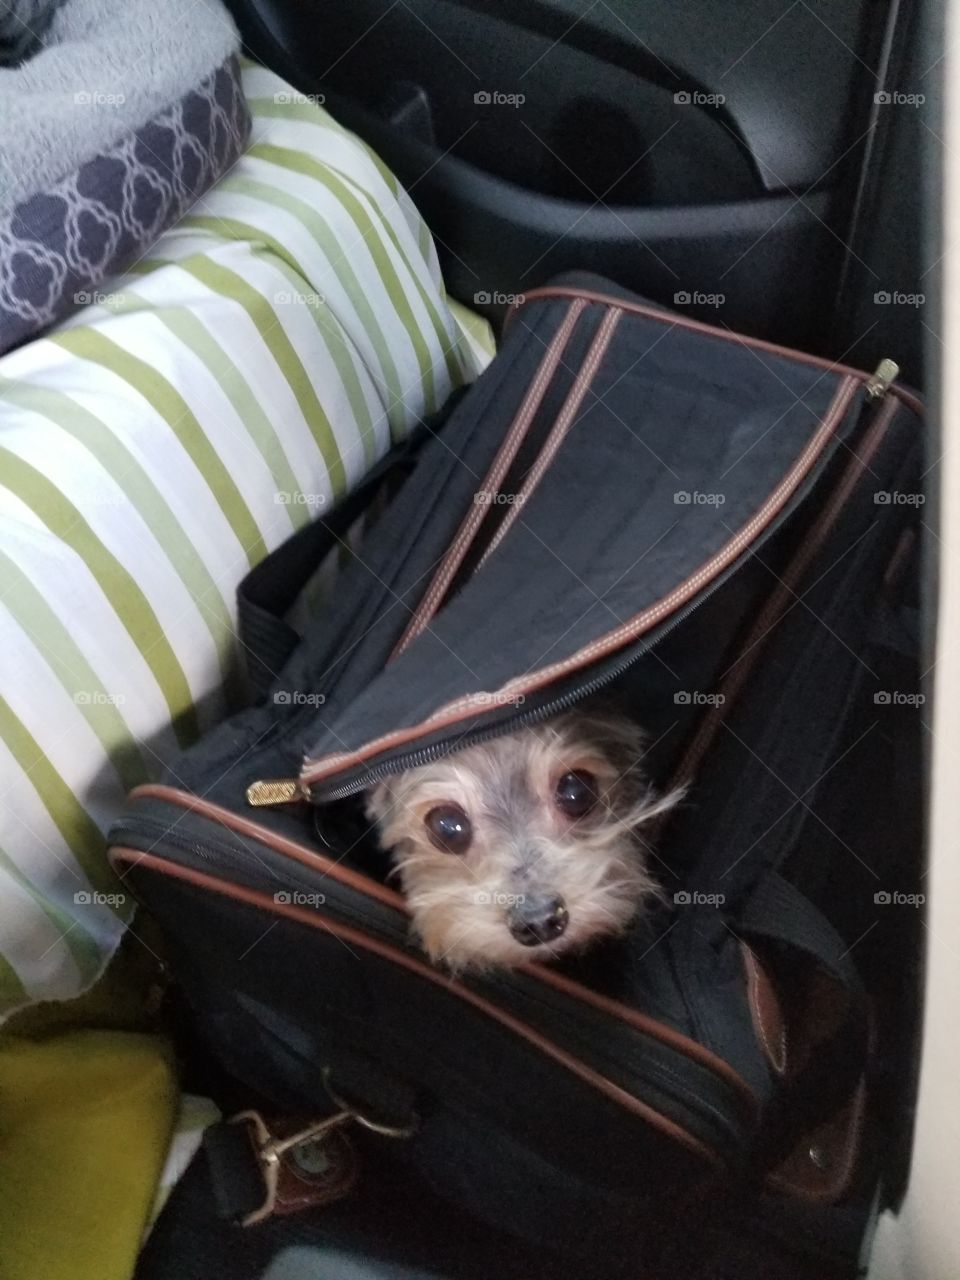 Doggie in a bag peeking out